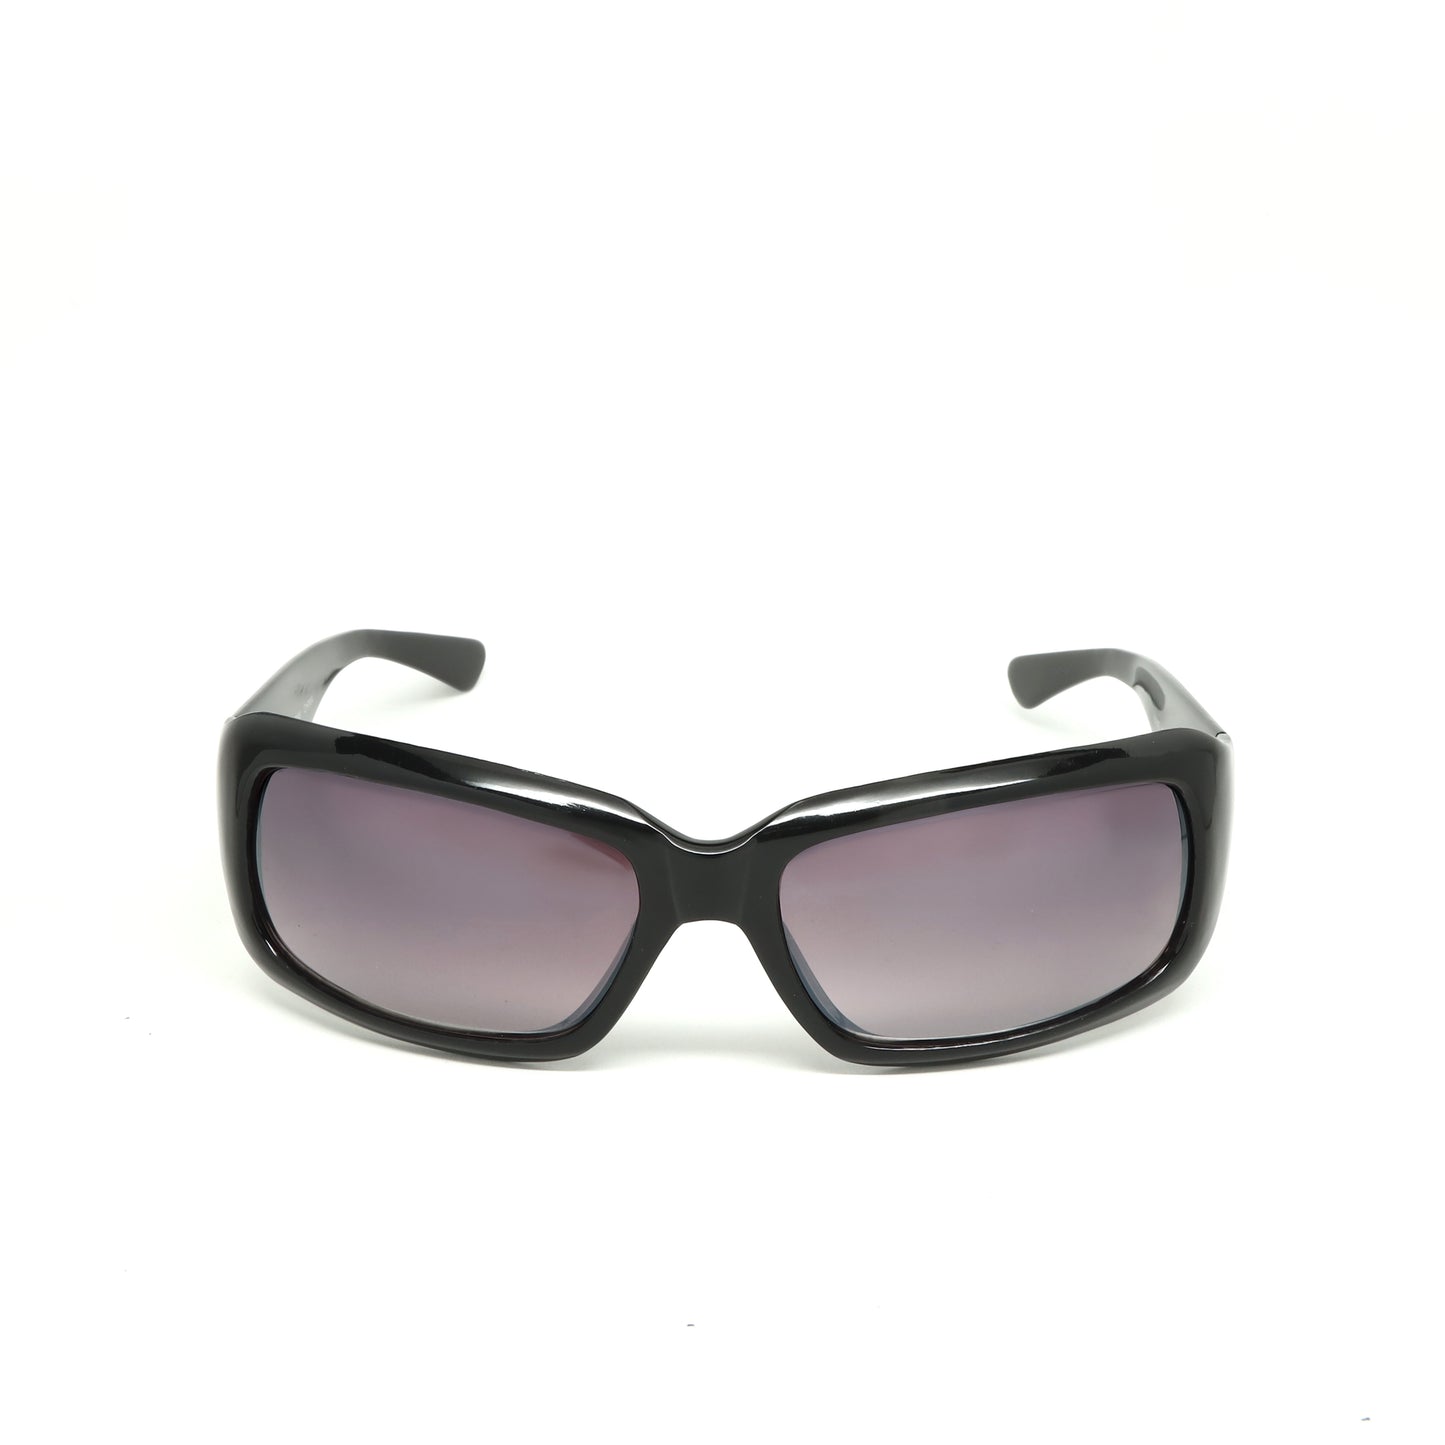 //Prototype 95// Oversized Chopper Cross Wraparound Sunglasses - Black